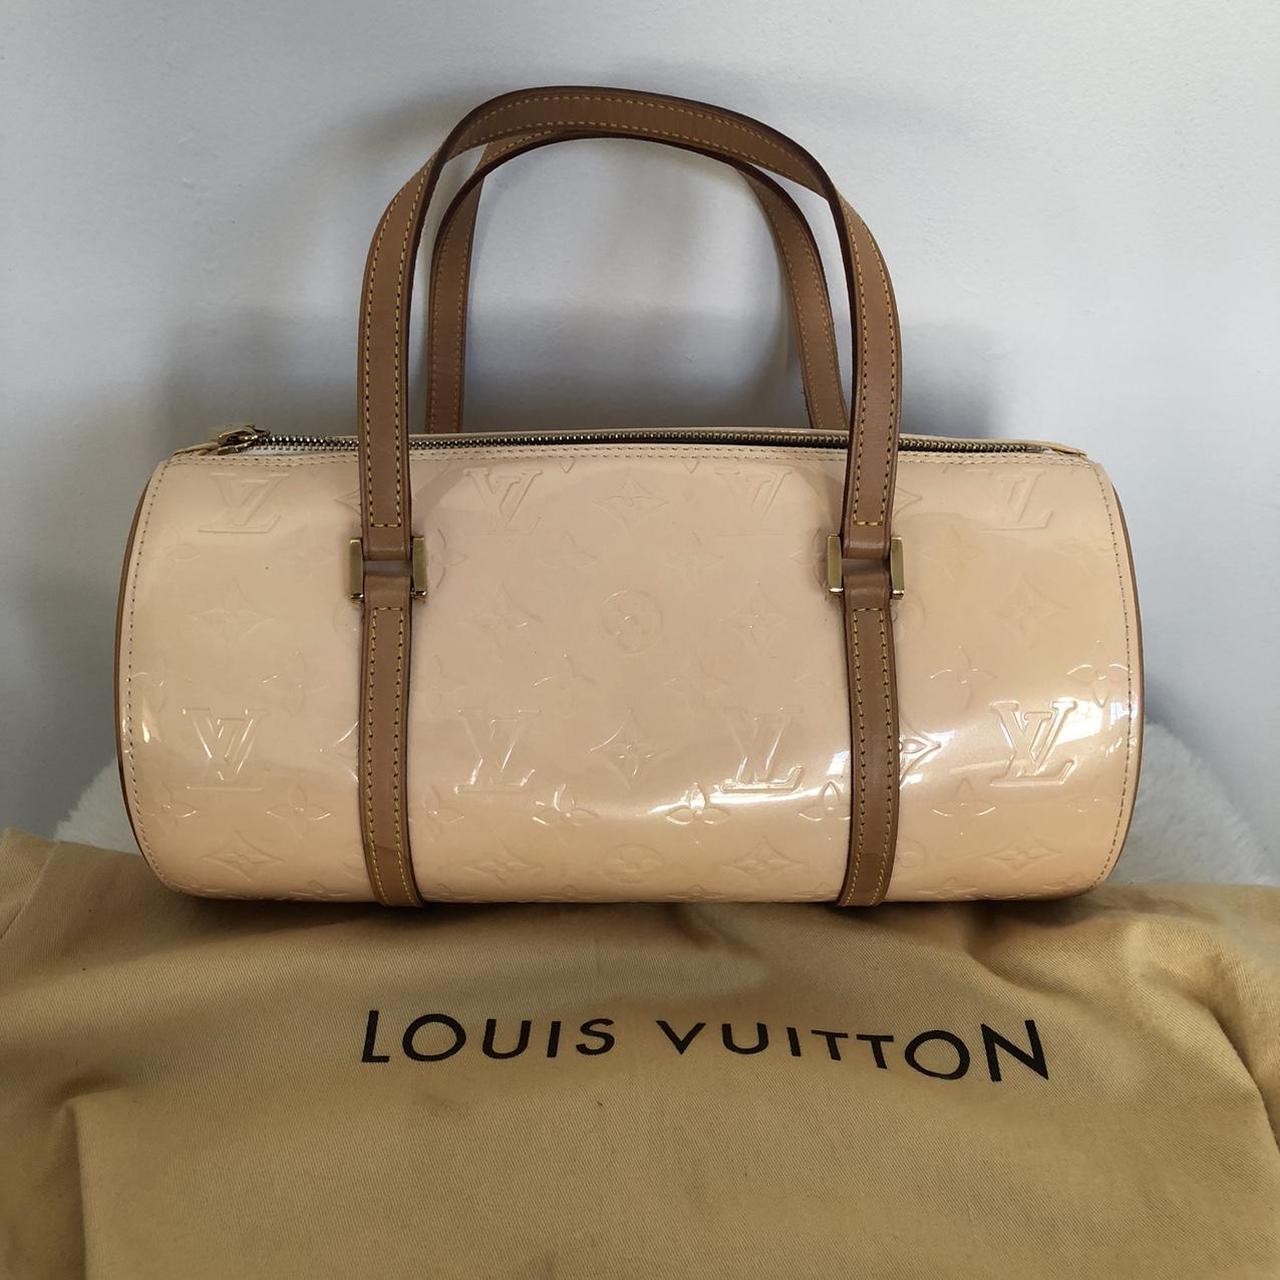 ❌ON HOLD❌, Louis Vuitton Papillon Vernis Handbag